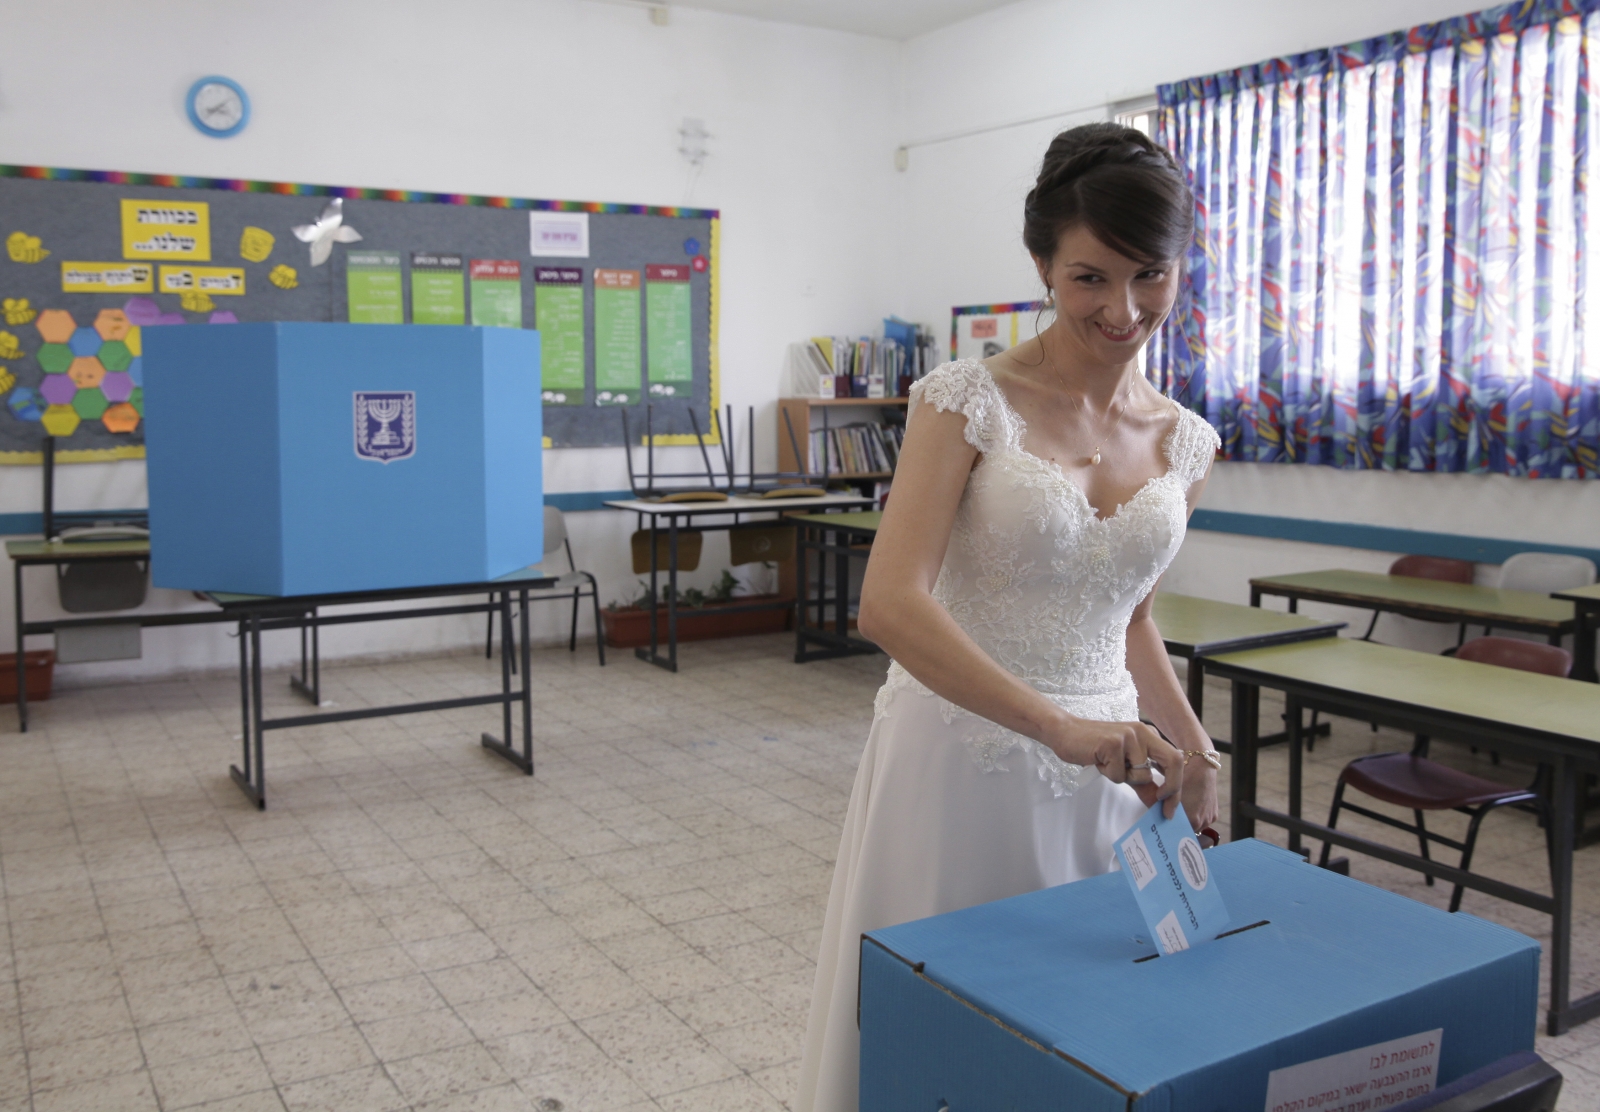 Israel elections 2015